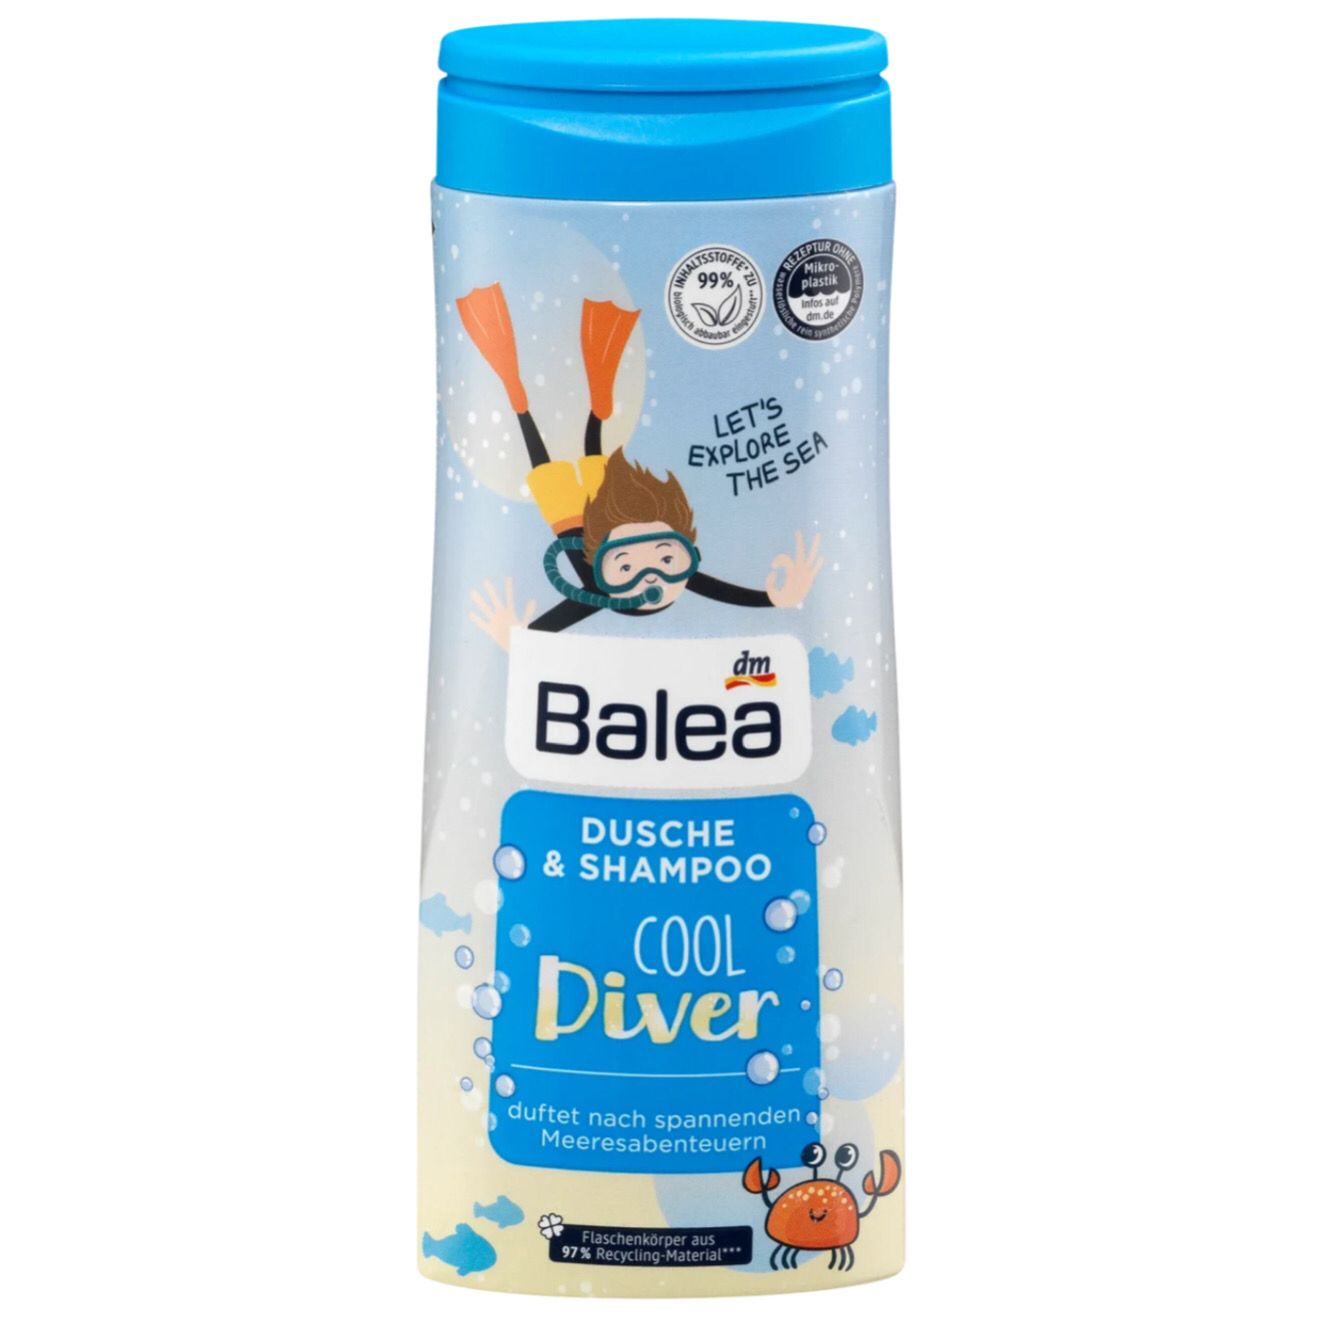 Balea cool diver shampoo for kids